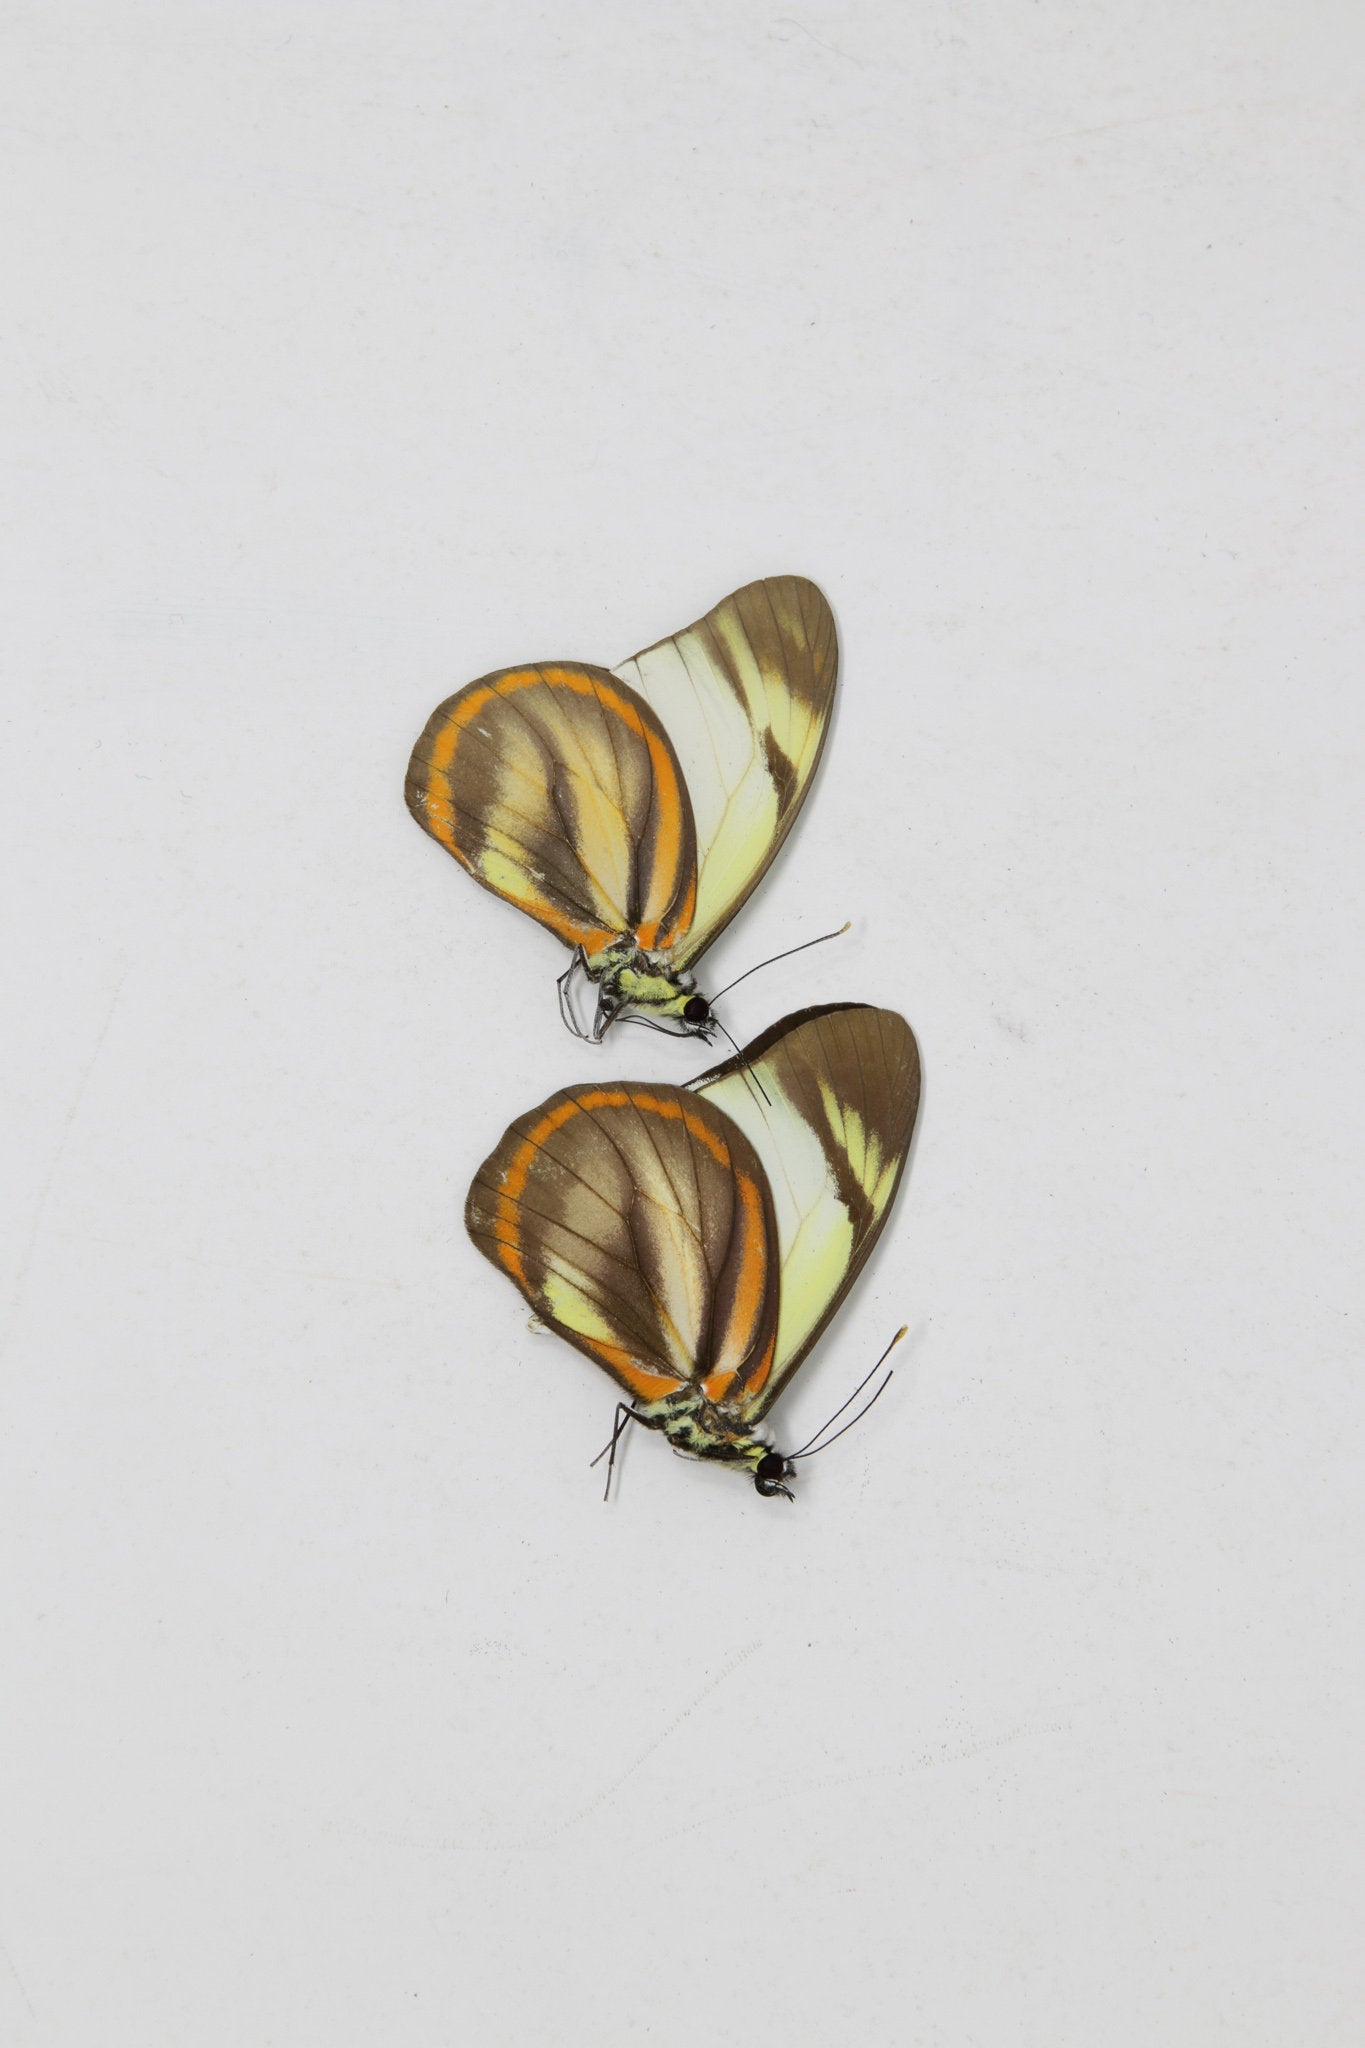 2 x Hesperocharis hirlanda | The Hirlanda White Butterfly | A1 Unmounted Specimens